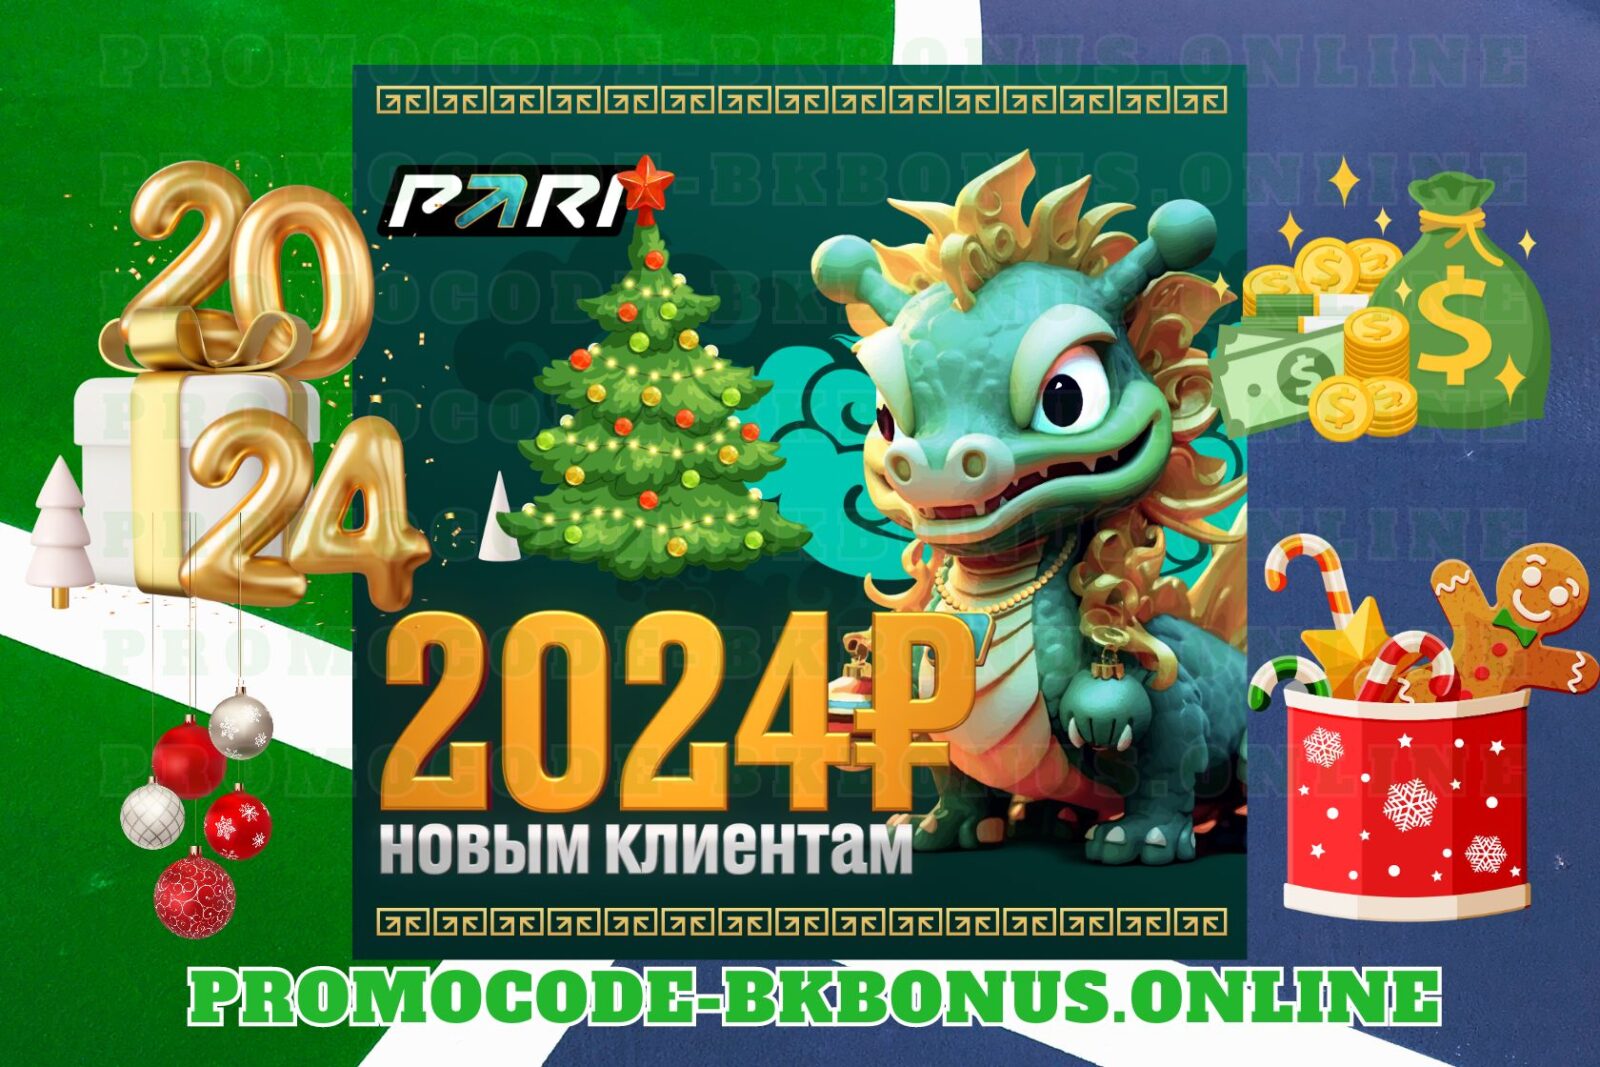 poluchit-fribet-pari-2024-promokod-fribet-bonus-bukmekerskaya-kontora-stavki-na-sport-kopiya-2023-12-28T123236.749